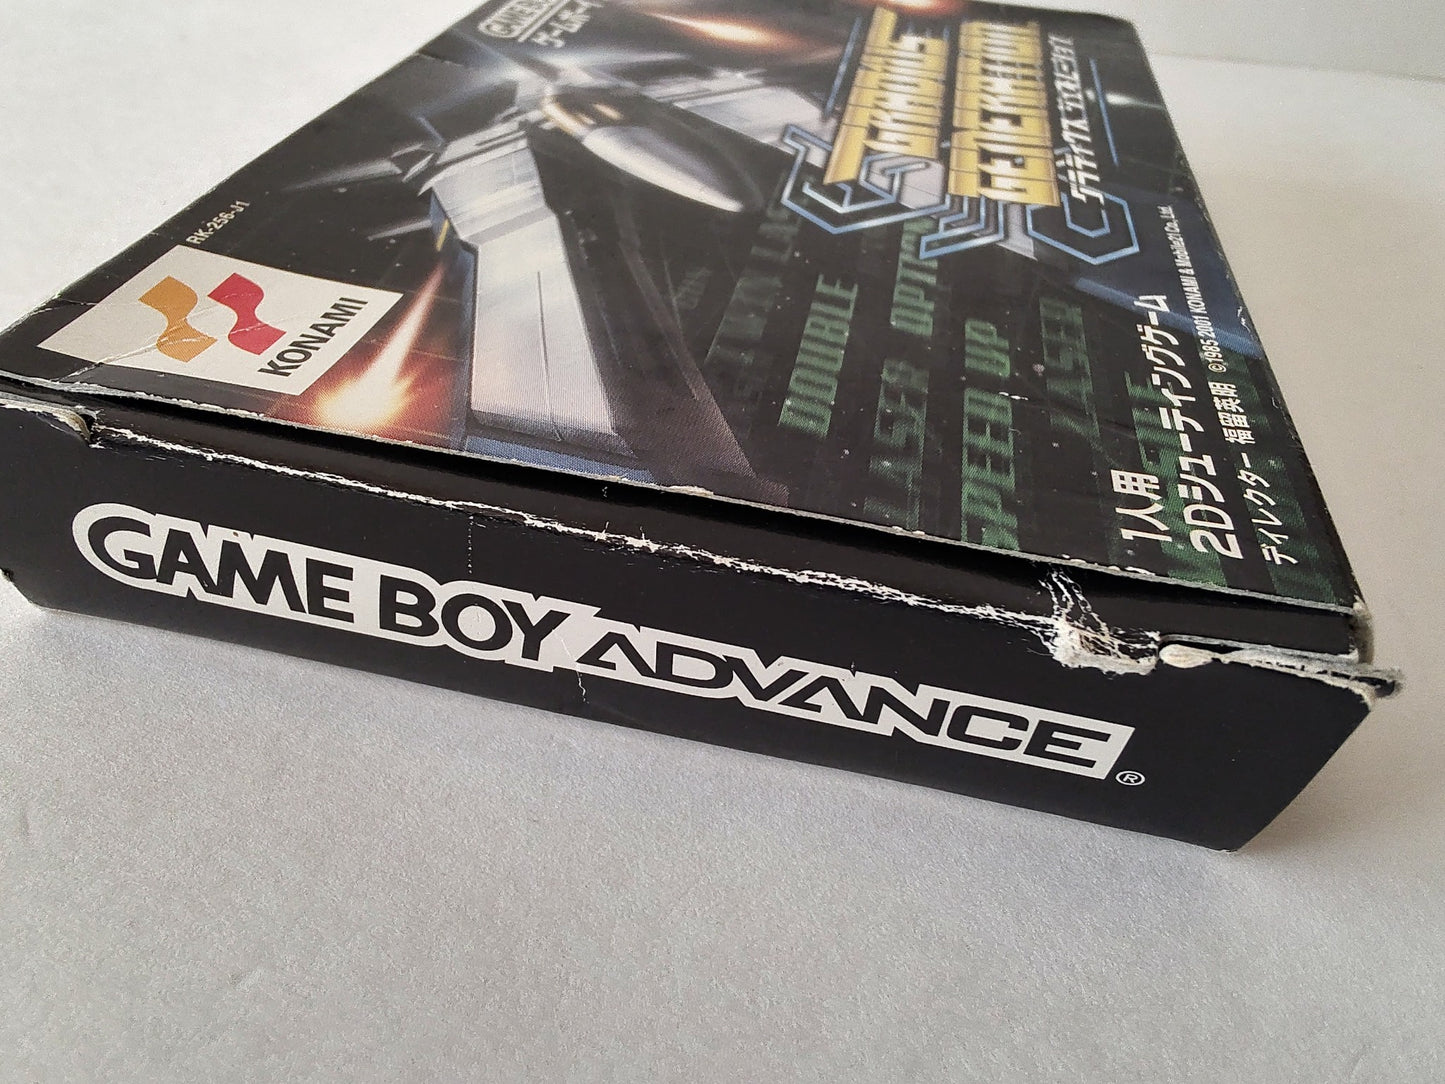 Gradius Generation Gameboy Advance Cartridge,Manual,Boxed set, working-f0112-